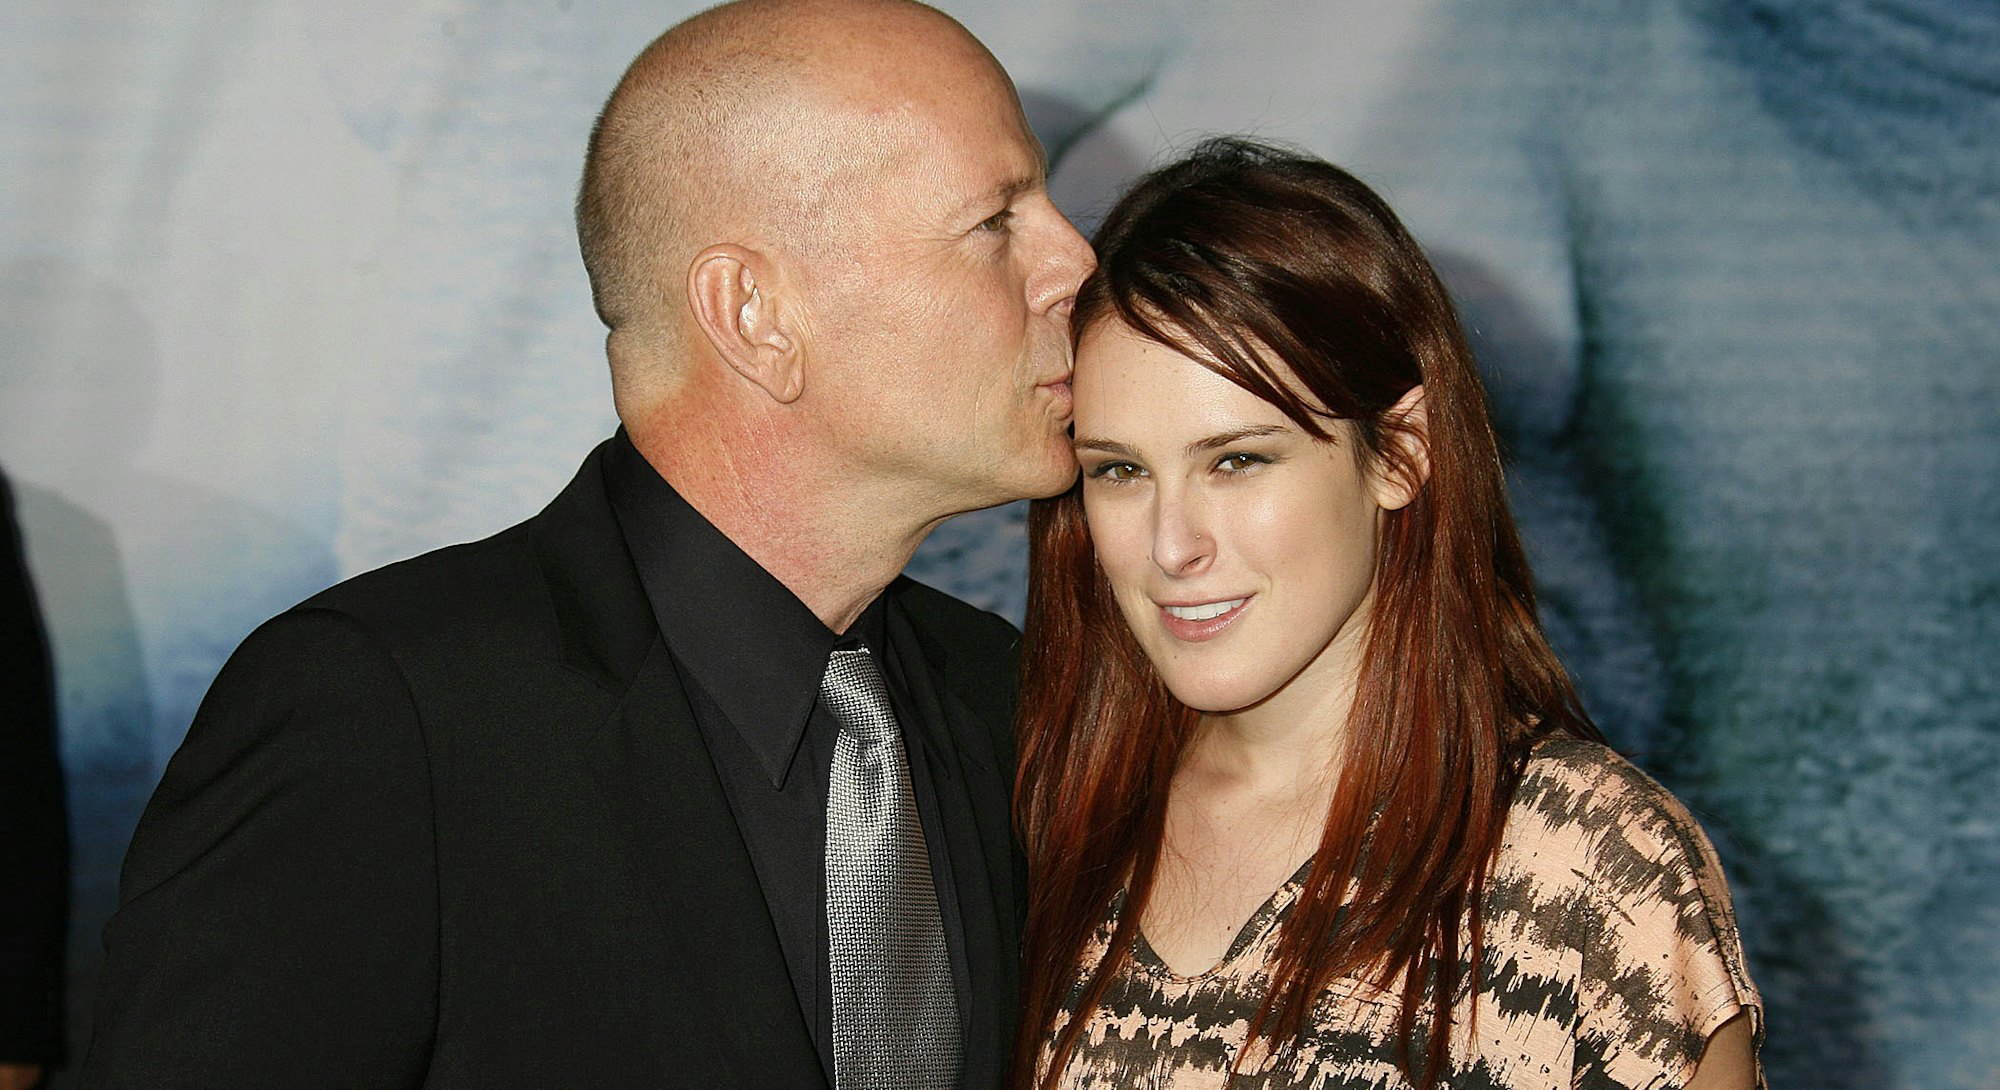 Bruce Willis with his daughter Rumer Willis in 2009.